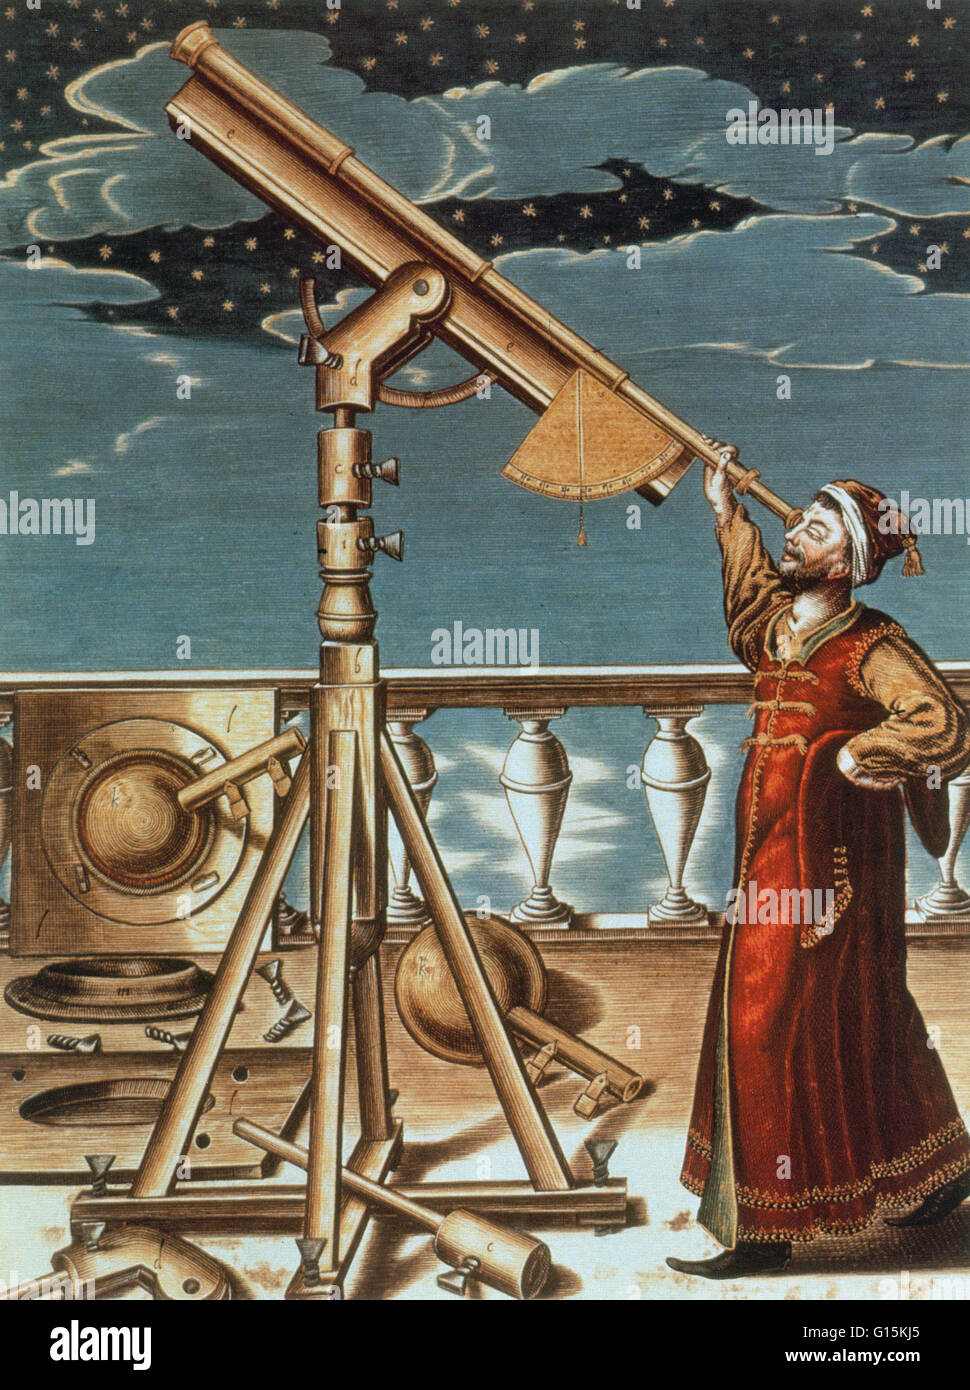 Johannes hevelius telescope hi-res stock photography and images - Alamy